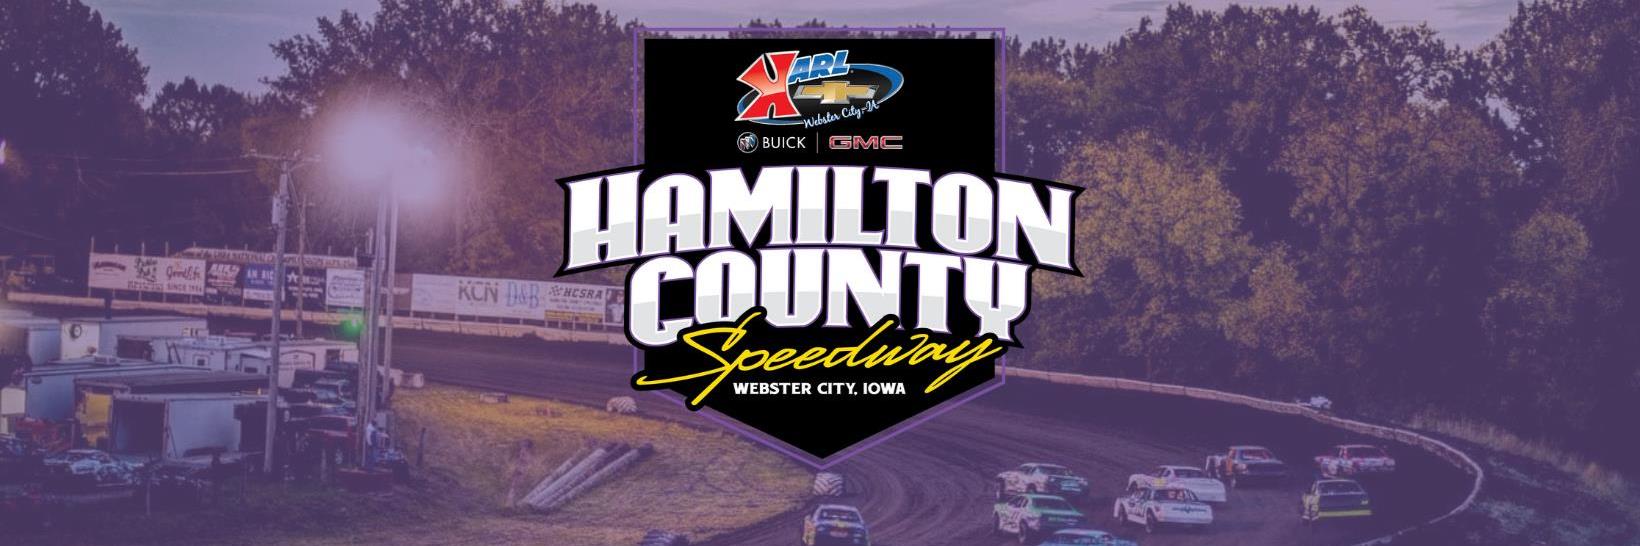 6/18/2022 - Hamilton County Speedway